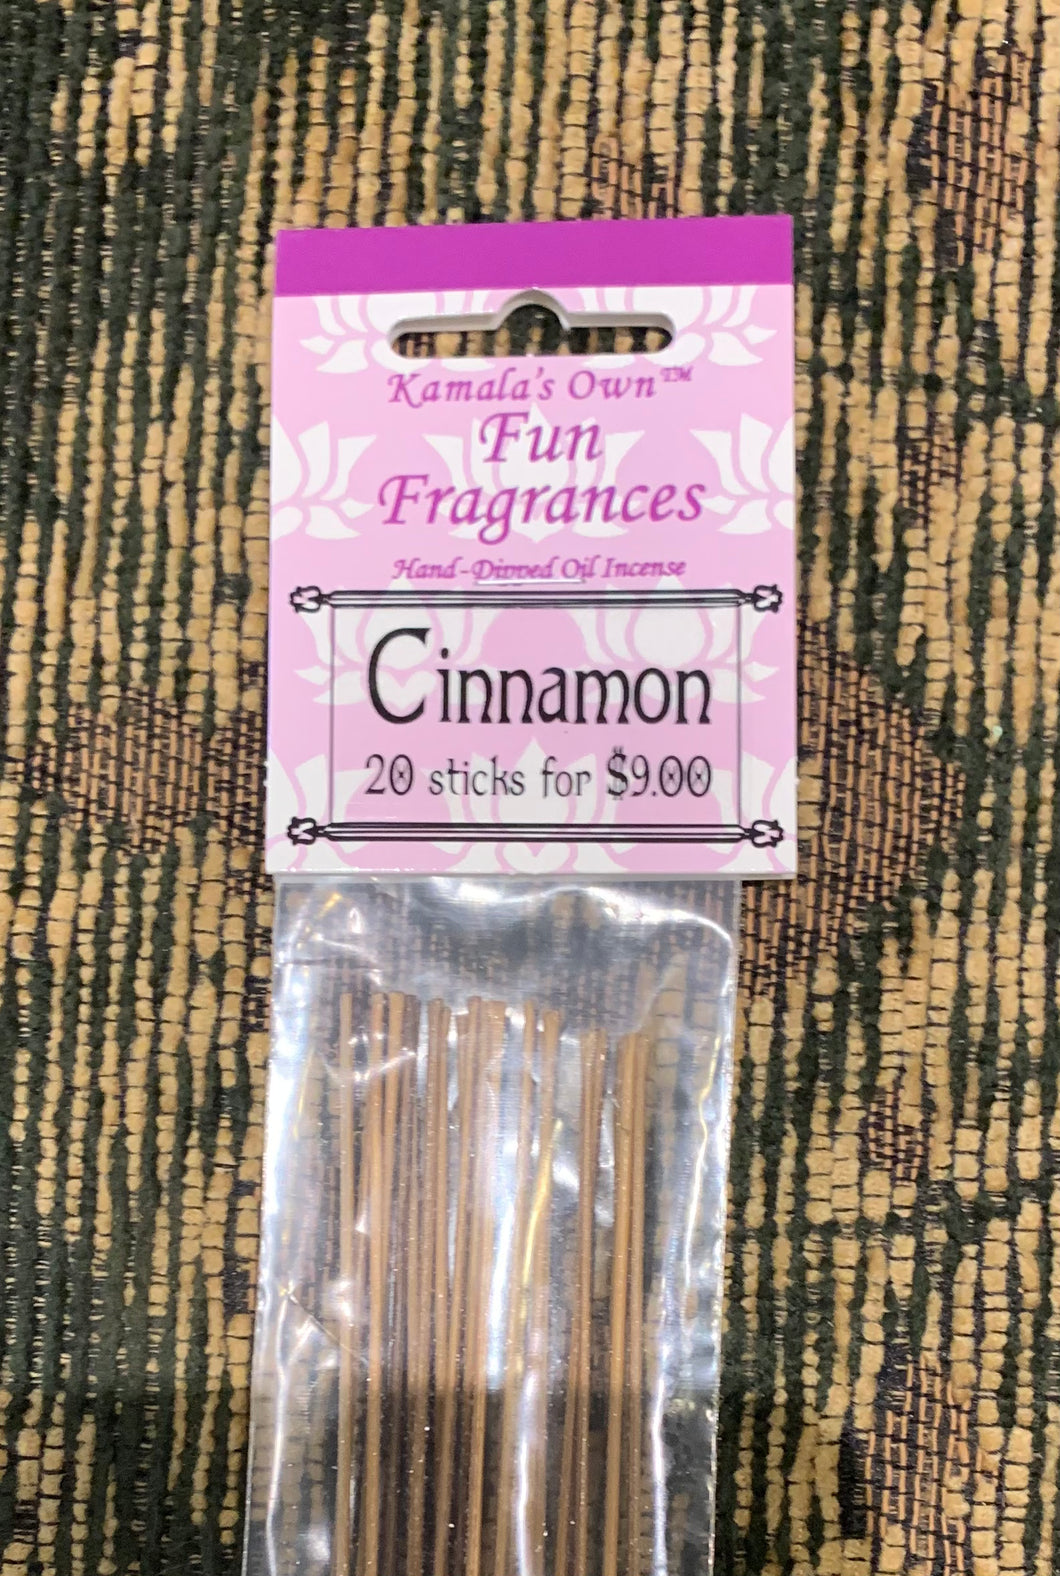 Cinnamon incense sticks